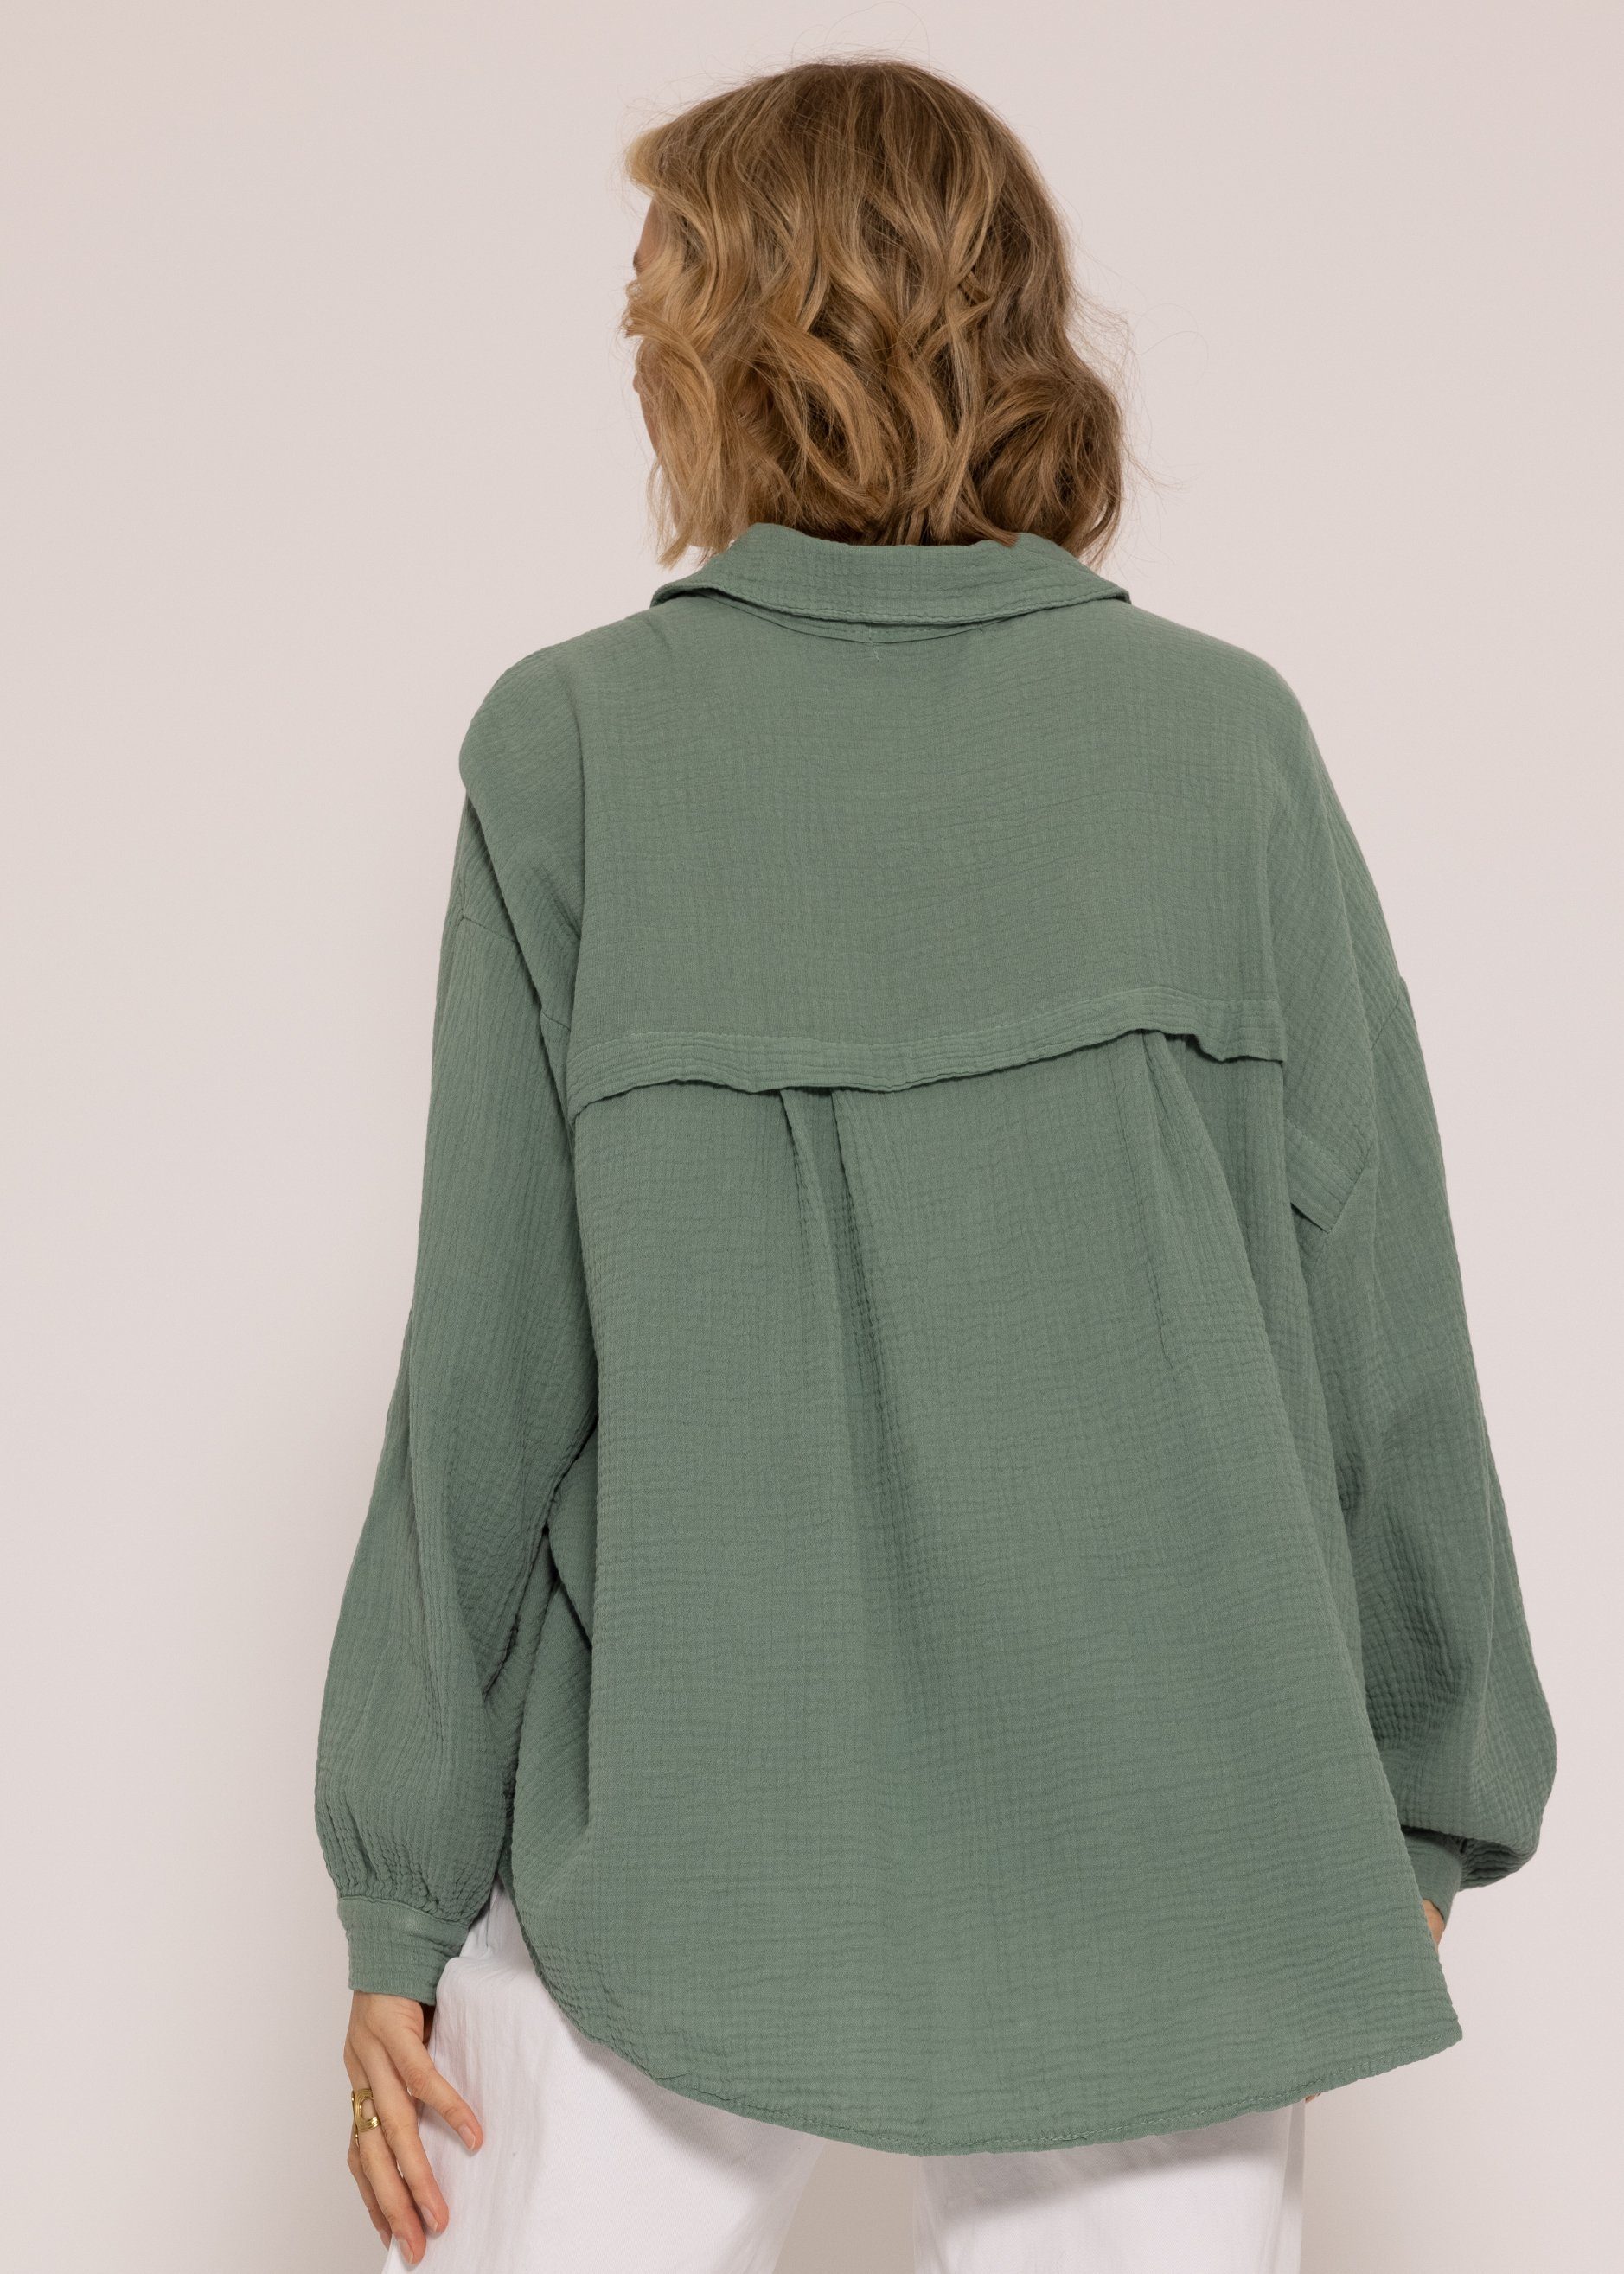 mit SASSYCLASSY Langarm Grün Oversize Damen Musselin aus One Size Bluse Hemdbluse (Gr. Longbluse lang 36-48) Baumwolle V-Ausschnitt,